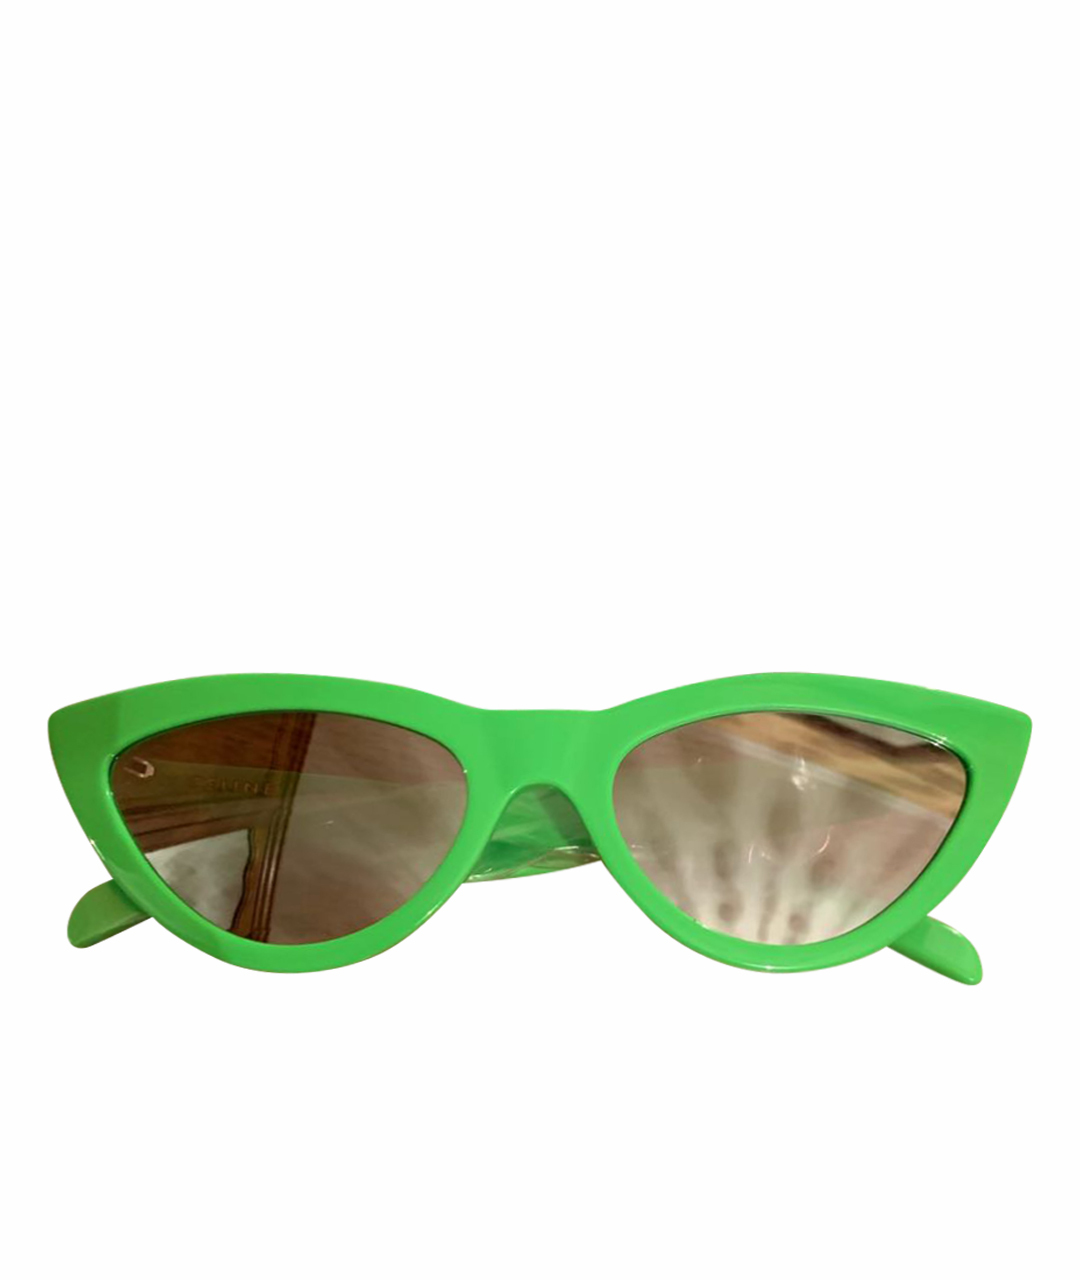 CELINE PRE-OWNED Зеленые пластиковые солнцезащитные очки, фото 1